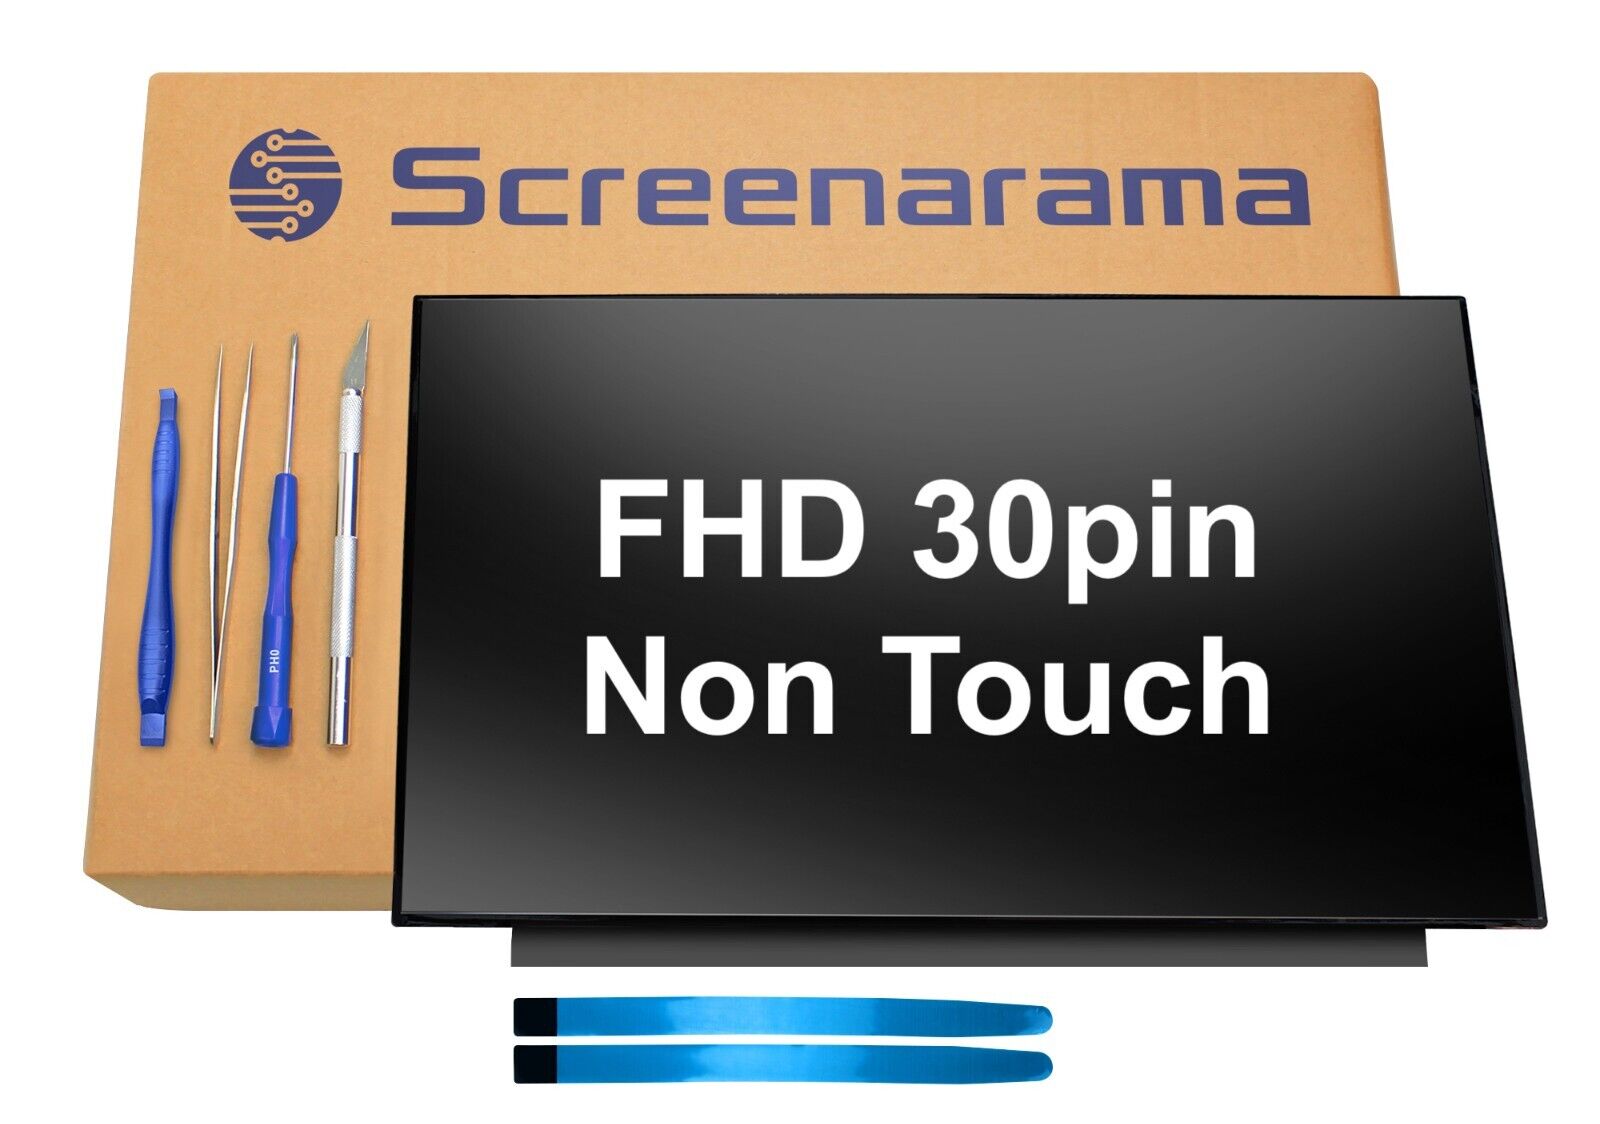 Acer Aspire N19H1 FHD IPS 30pin LED LCD Screen + Tools SCREENARAMA * FAST